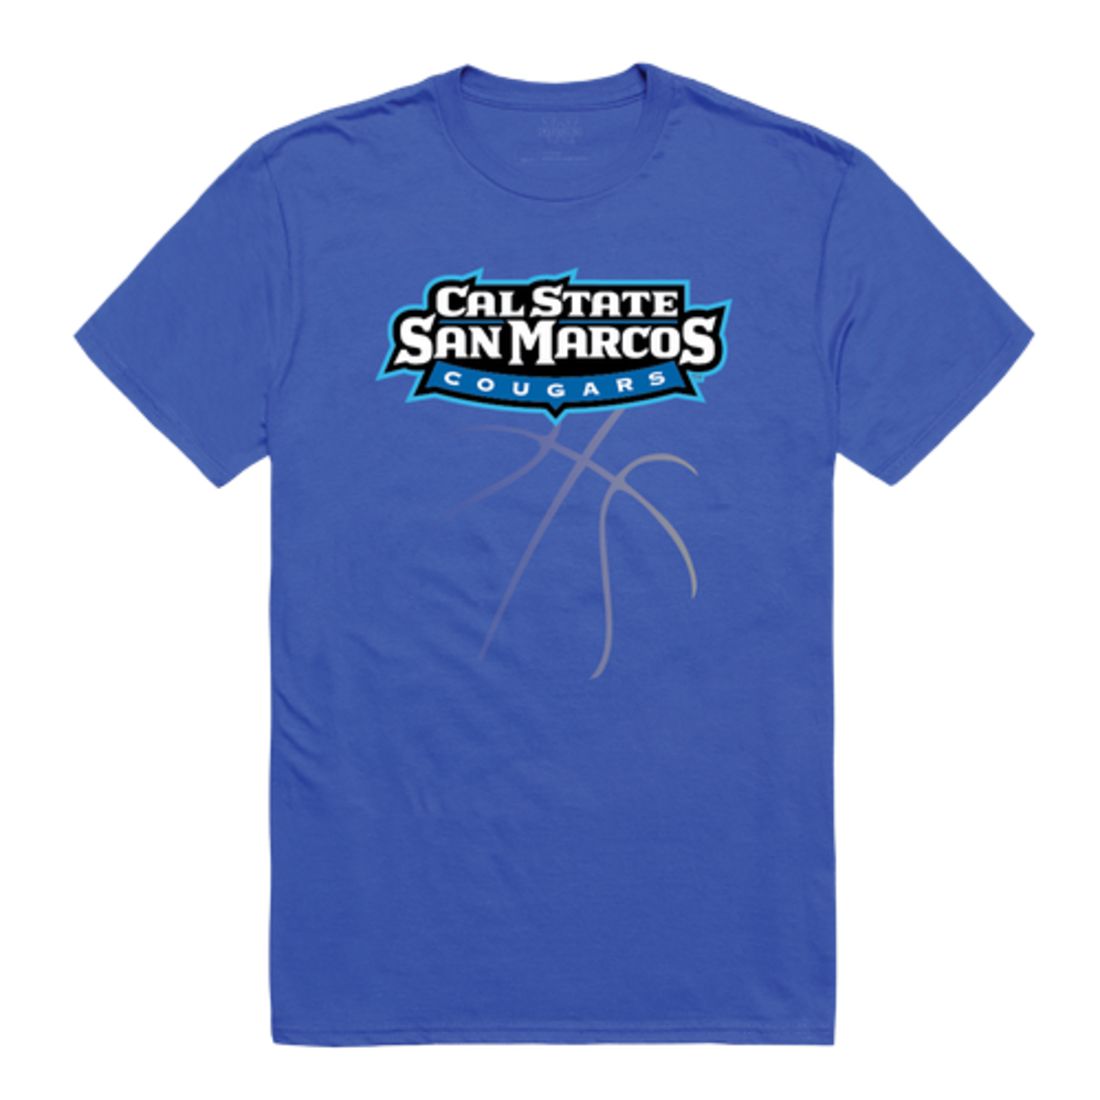 California State University San Marcos Cougars Basketball T-Shirt Tee